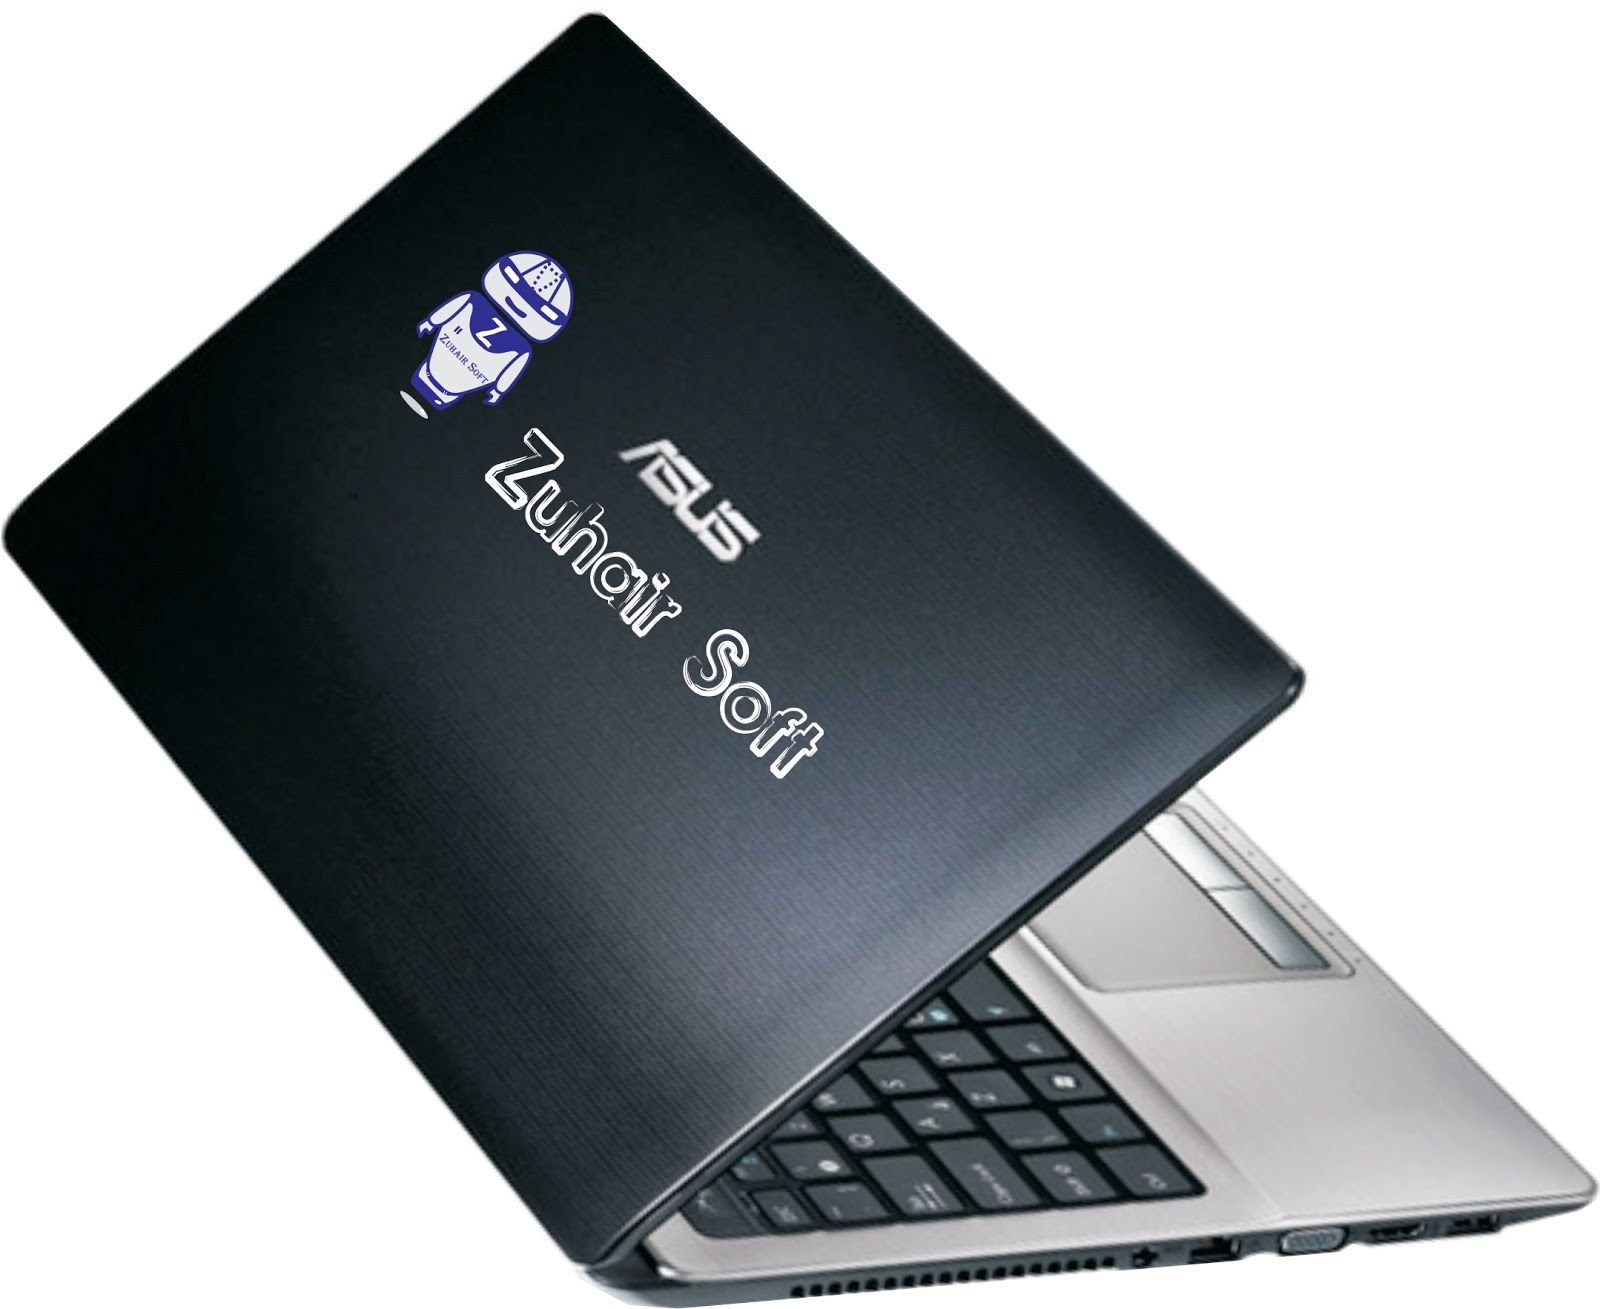 Asus Laptop X54h Drivers